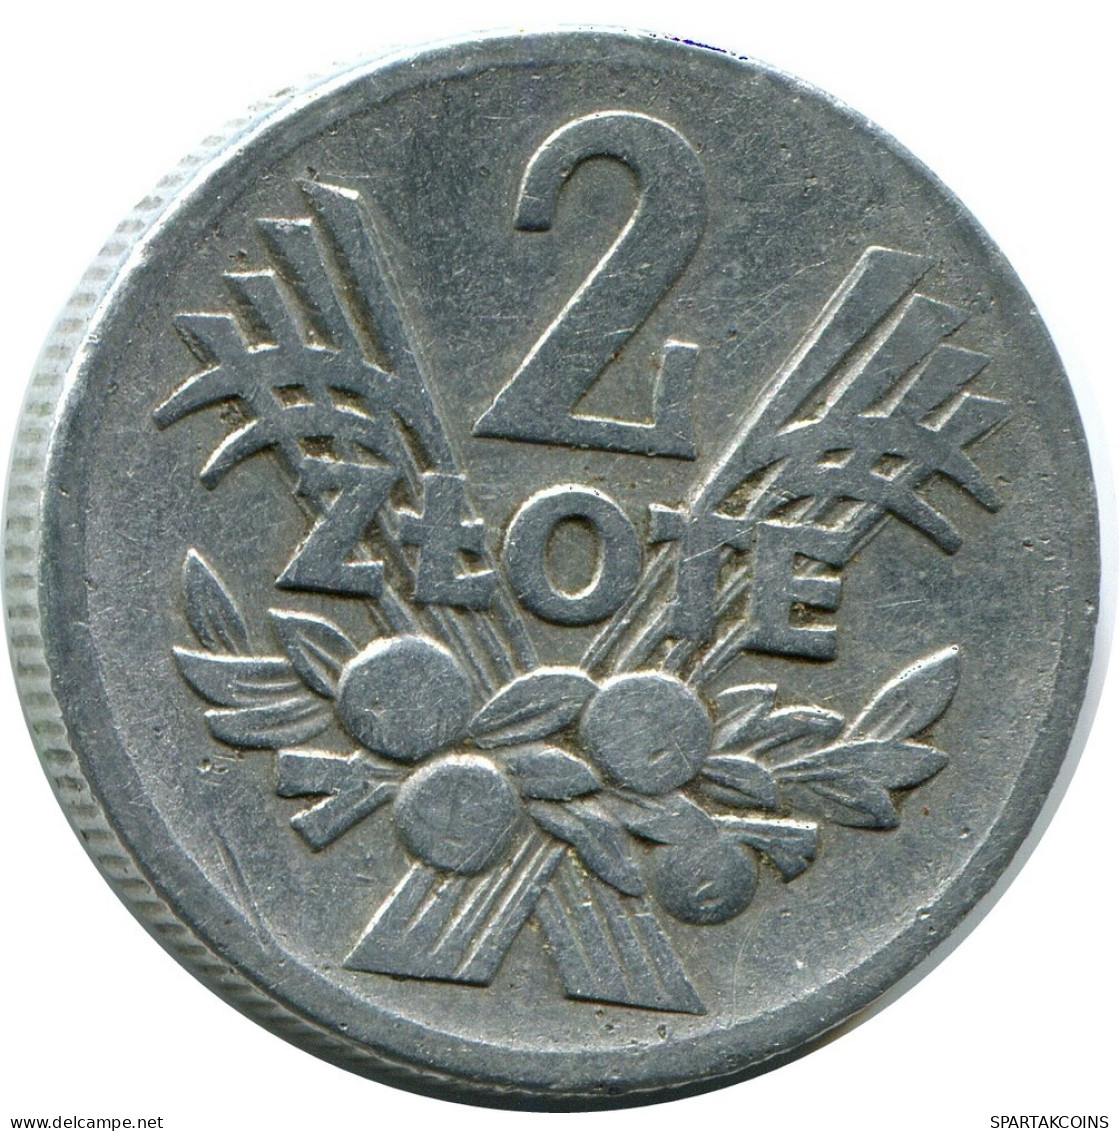 2 ZLOTE 1958 POLAND Coin #AZ317.U.A - Pologne